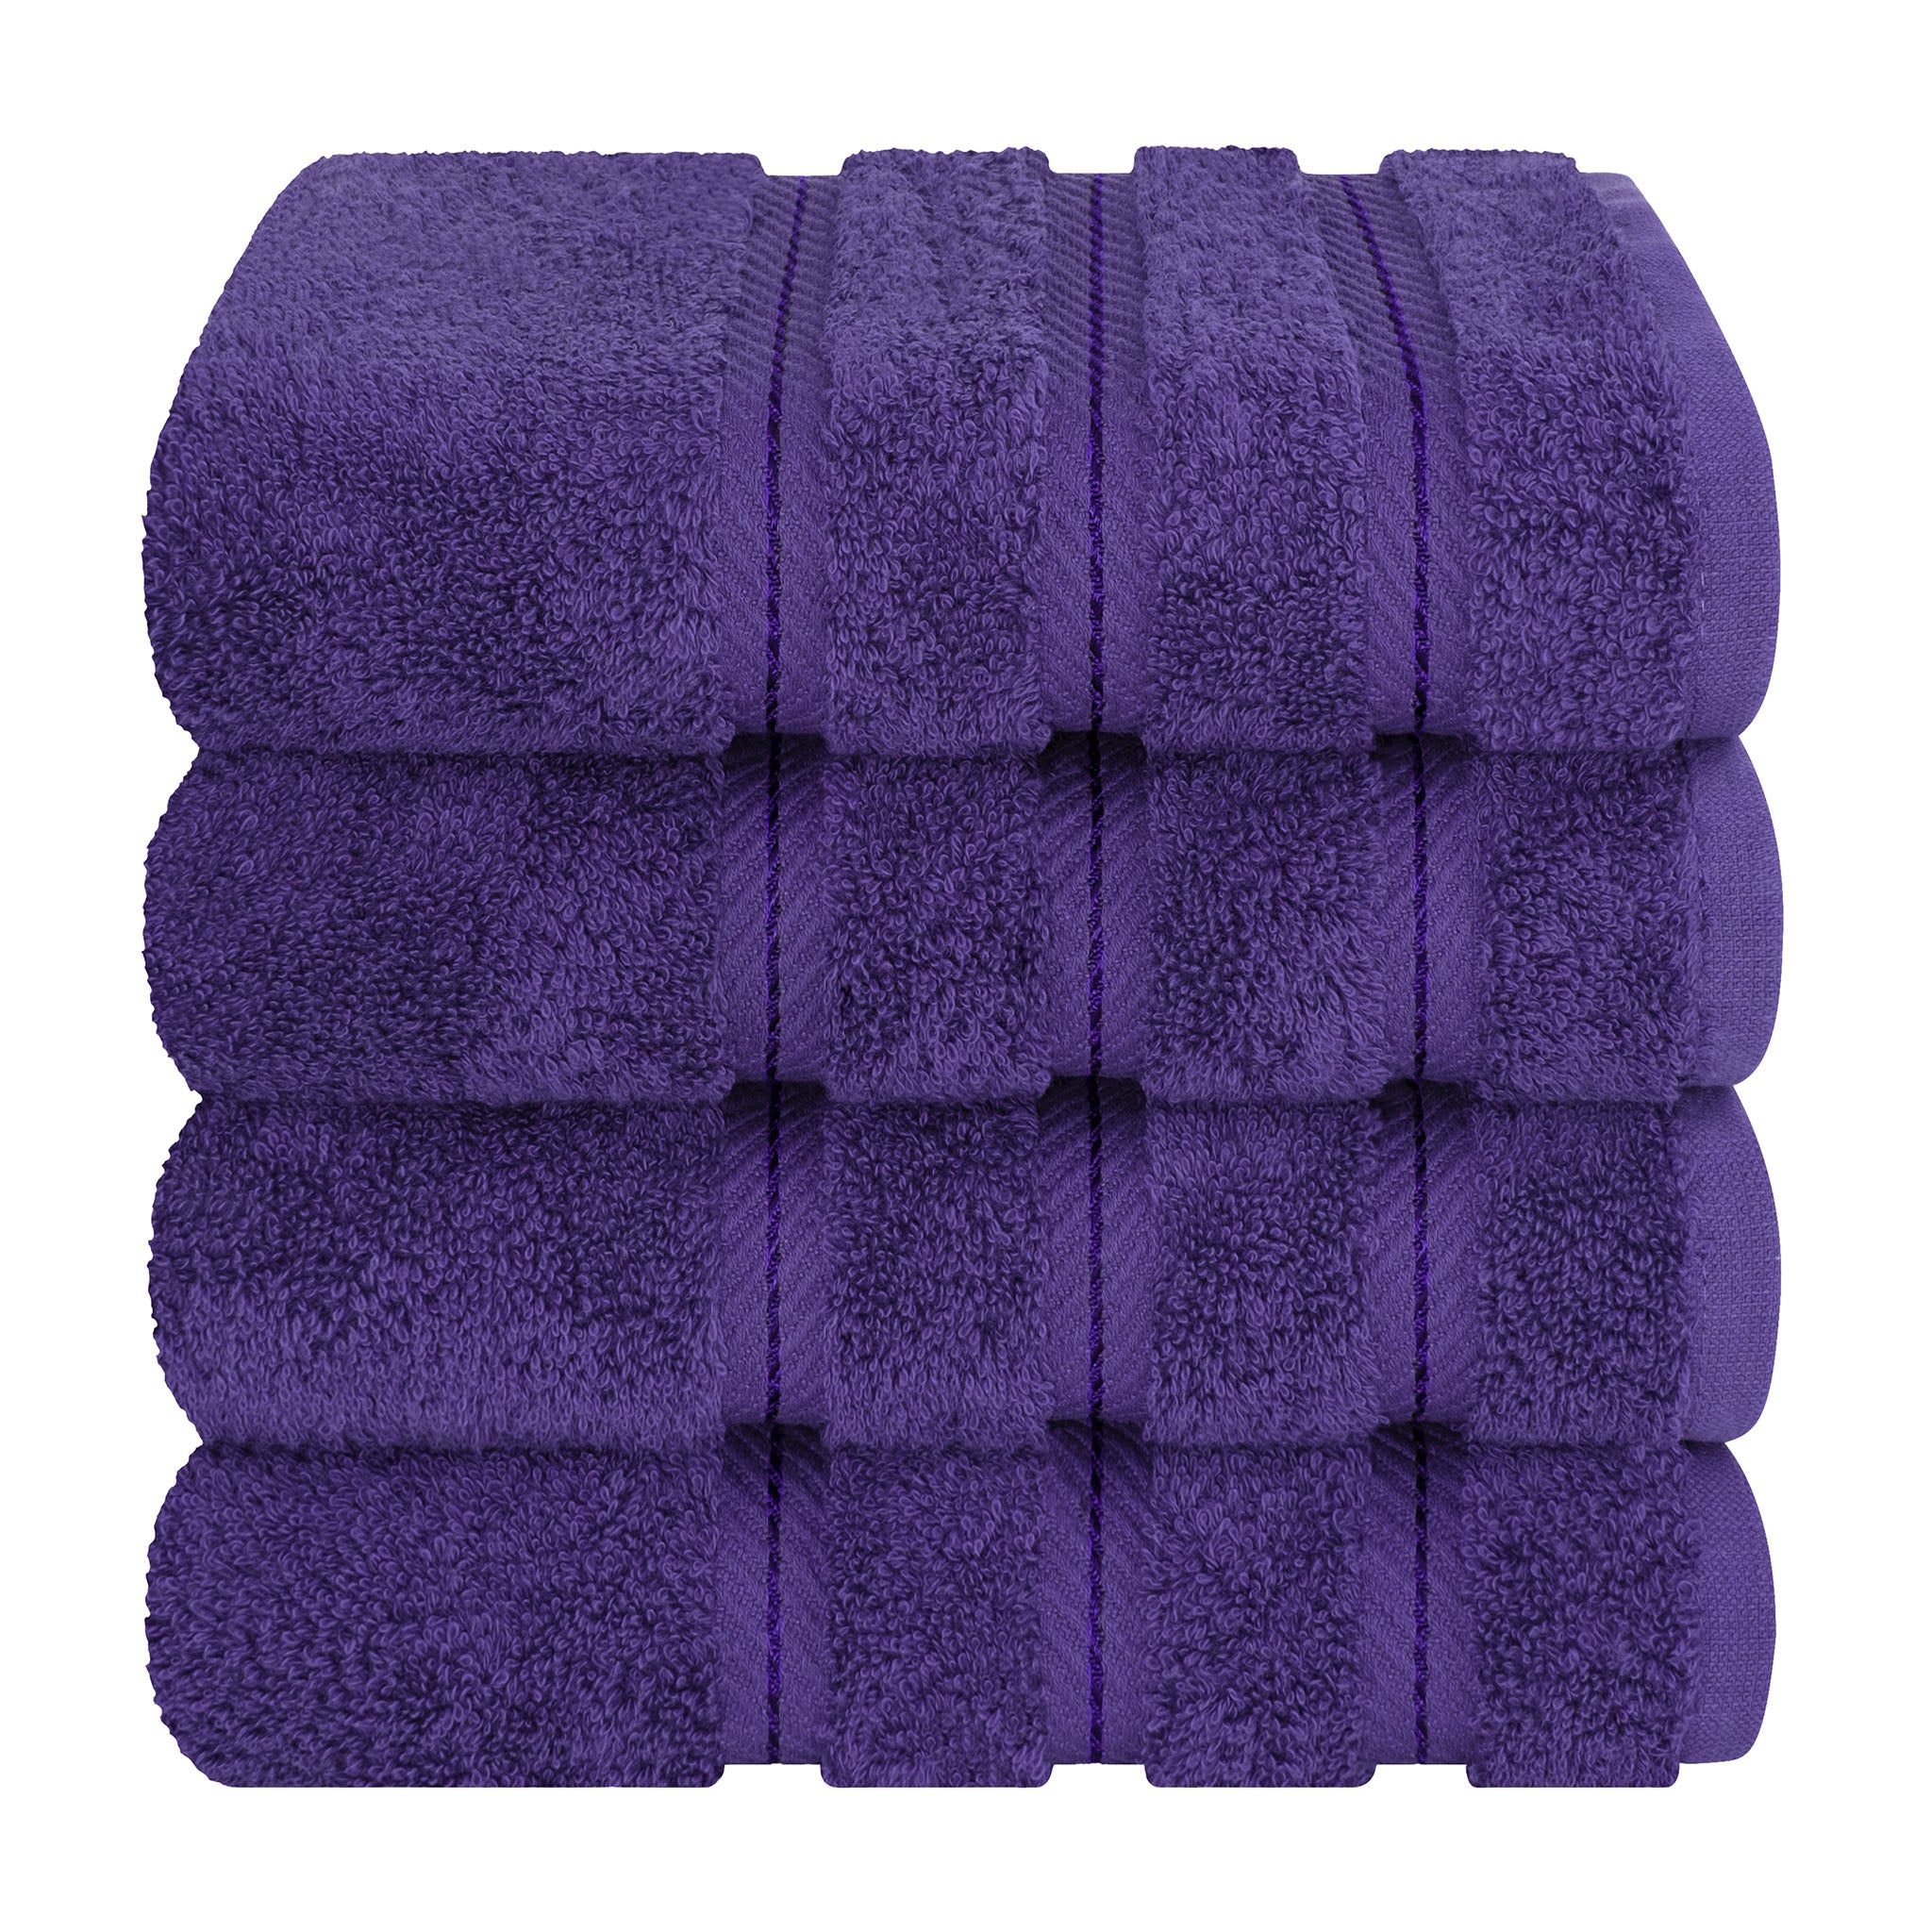  American Soft Linen 100% Turkish Cotton 4 Pack Hand Towel Set  purple-7